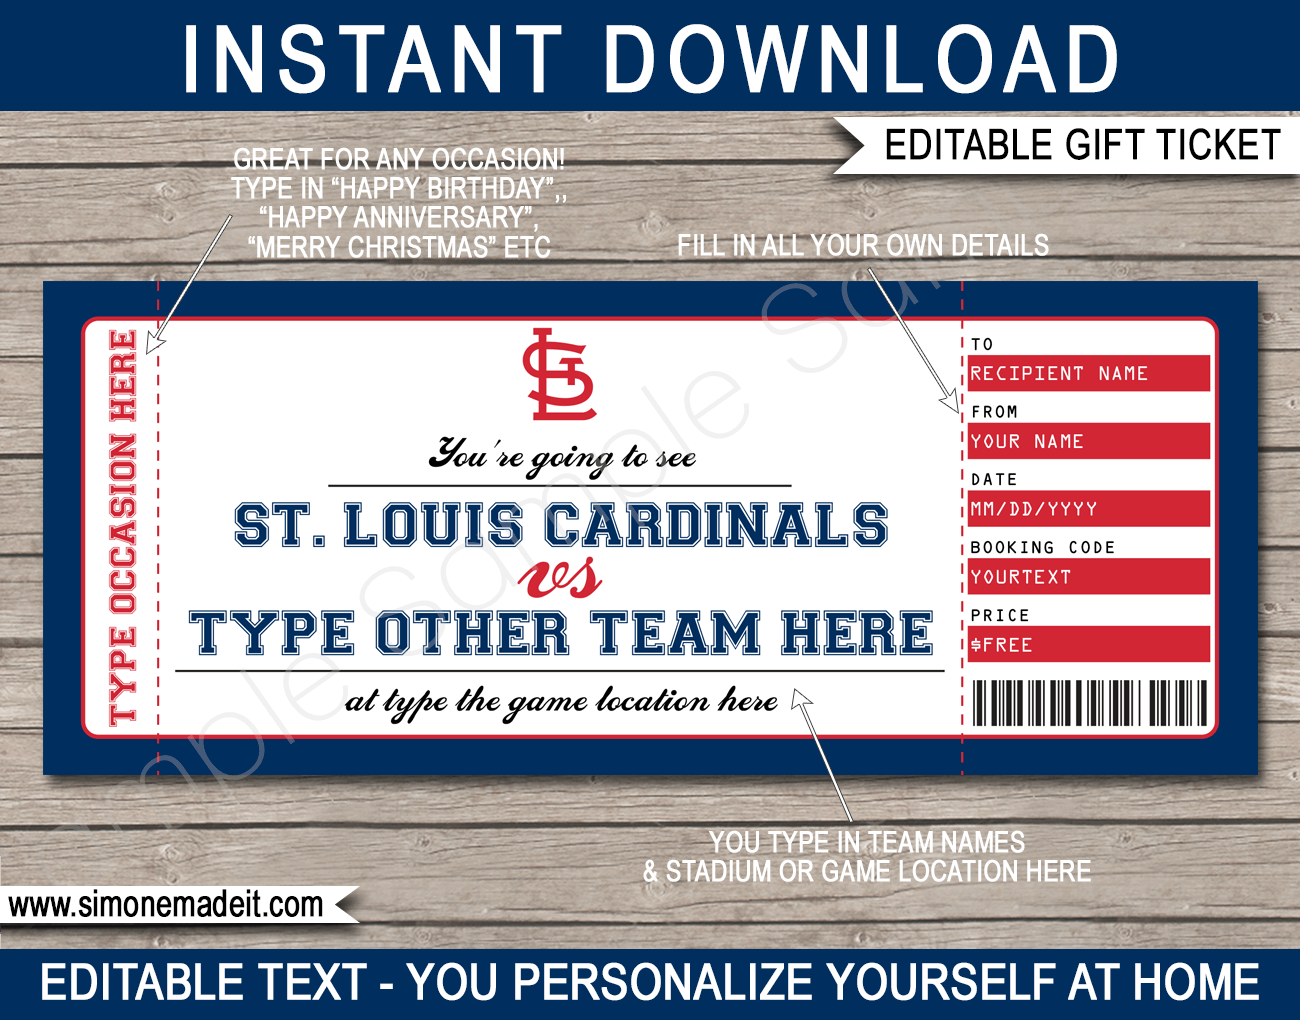 Printable 2023 St. Louis Cardinals Schedule